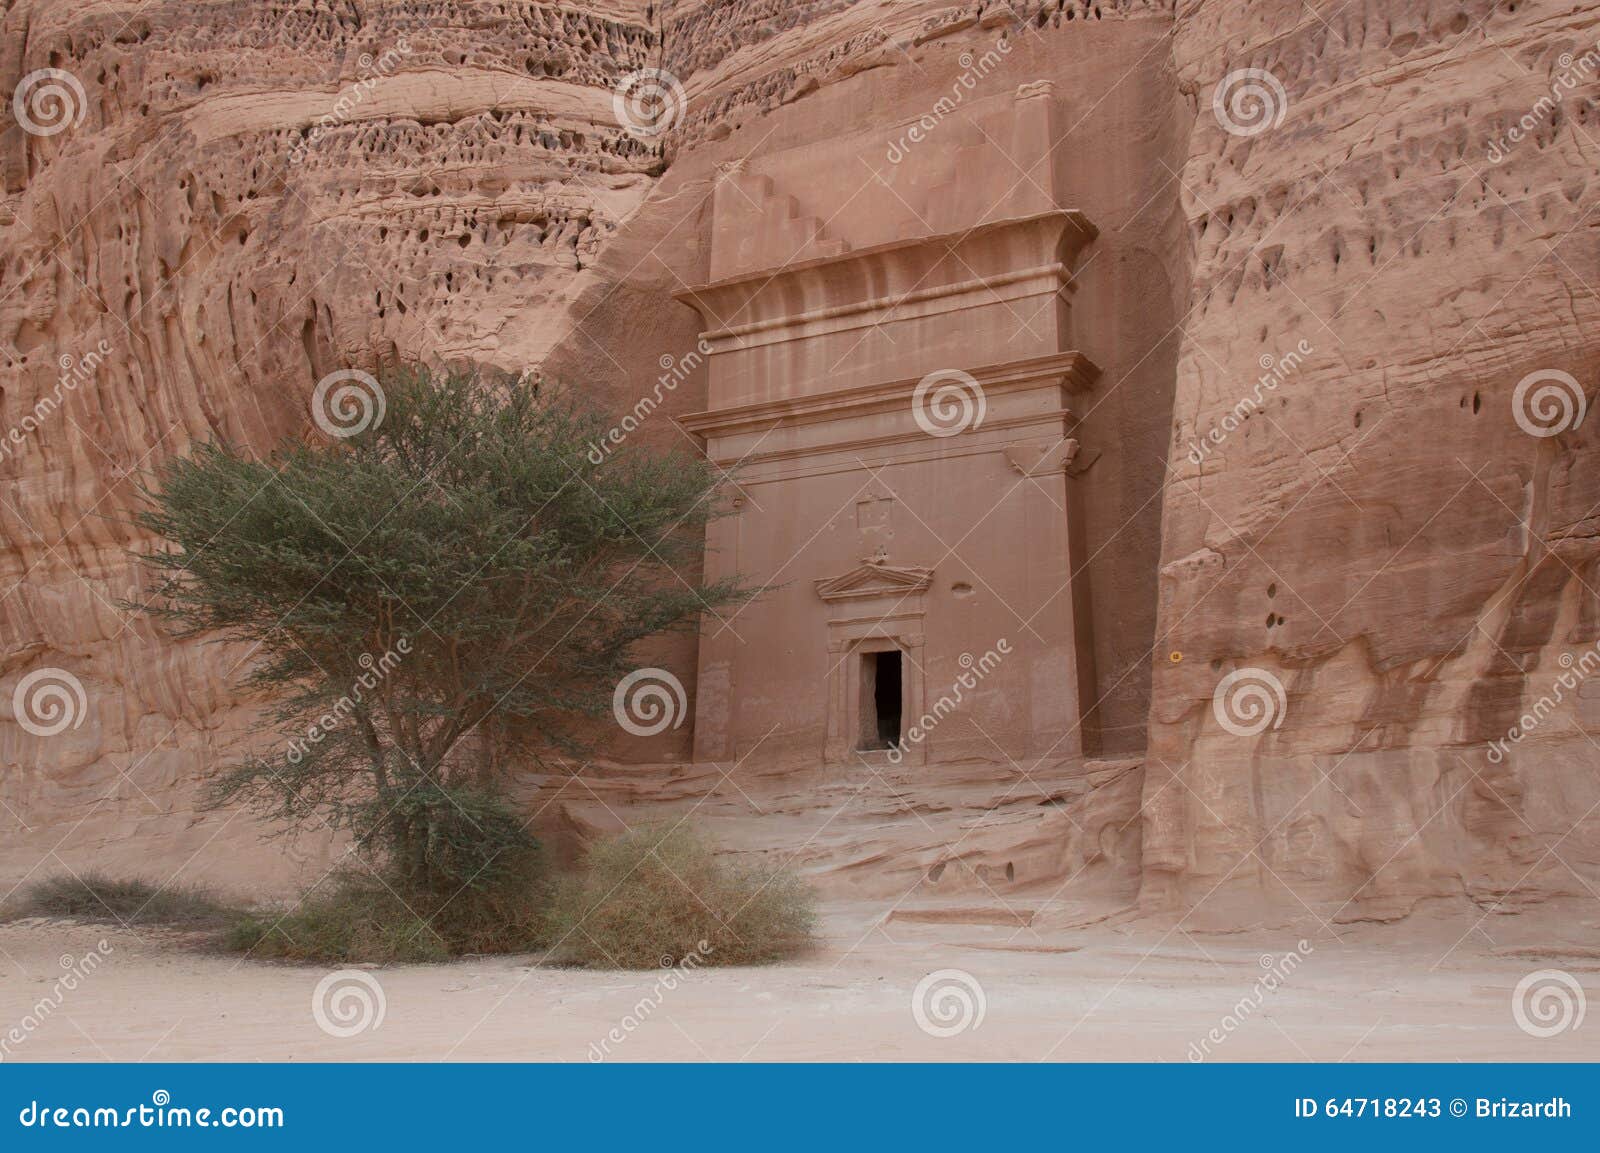 nabatean tomb in madain saleh archeological site, saudi arabia